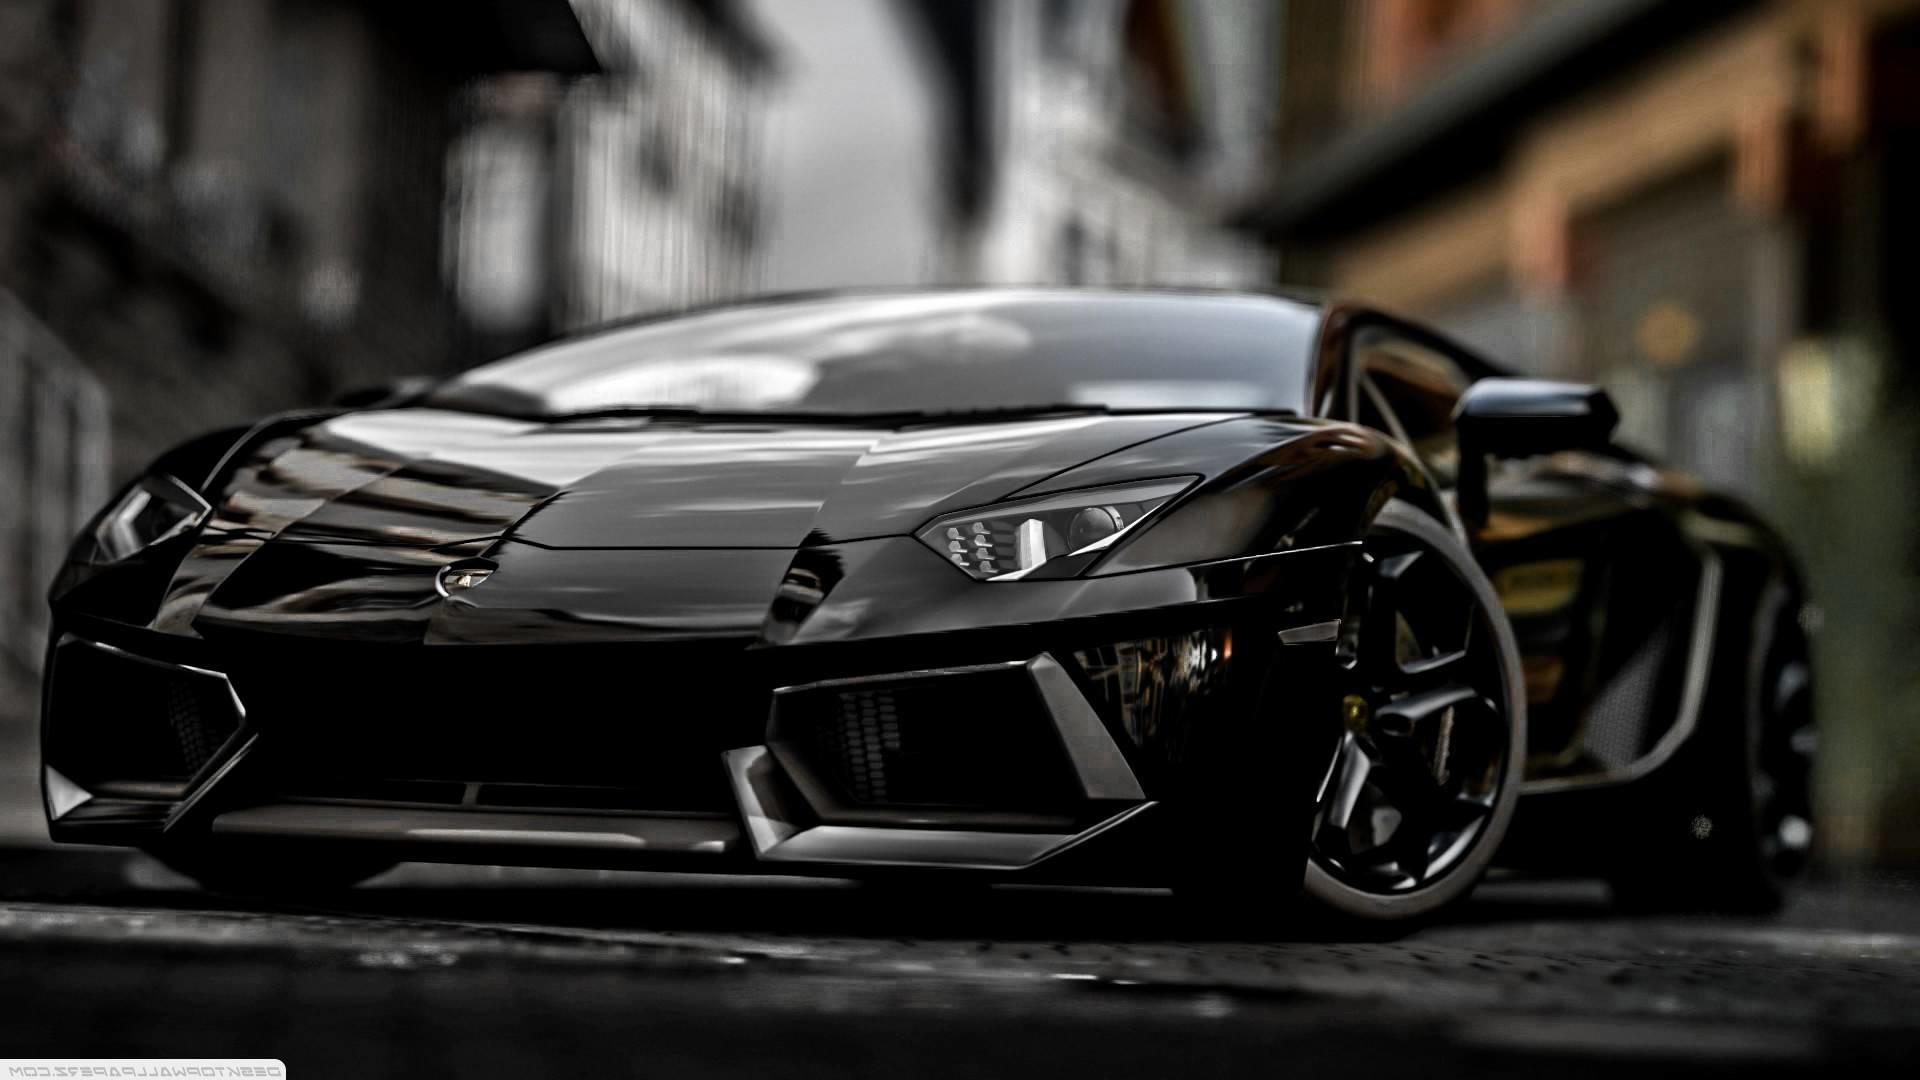 Lamborghini Aventador Black Desktop Wallpapers Wallpaper Cave